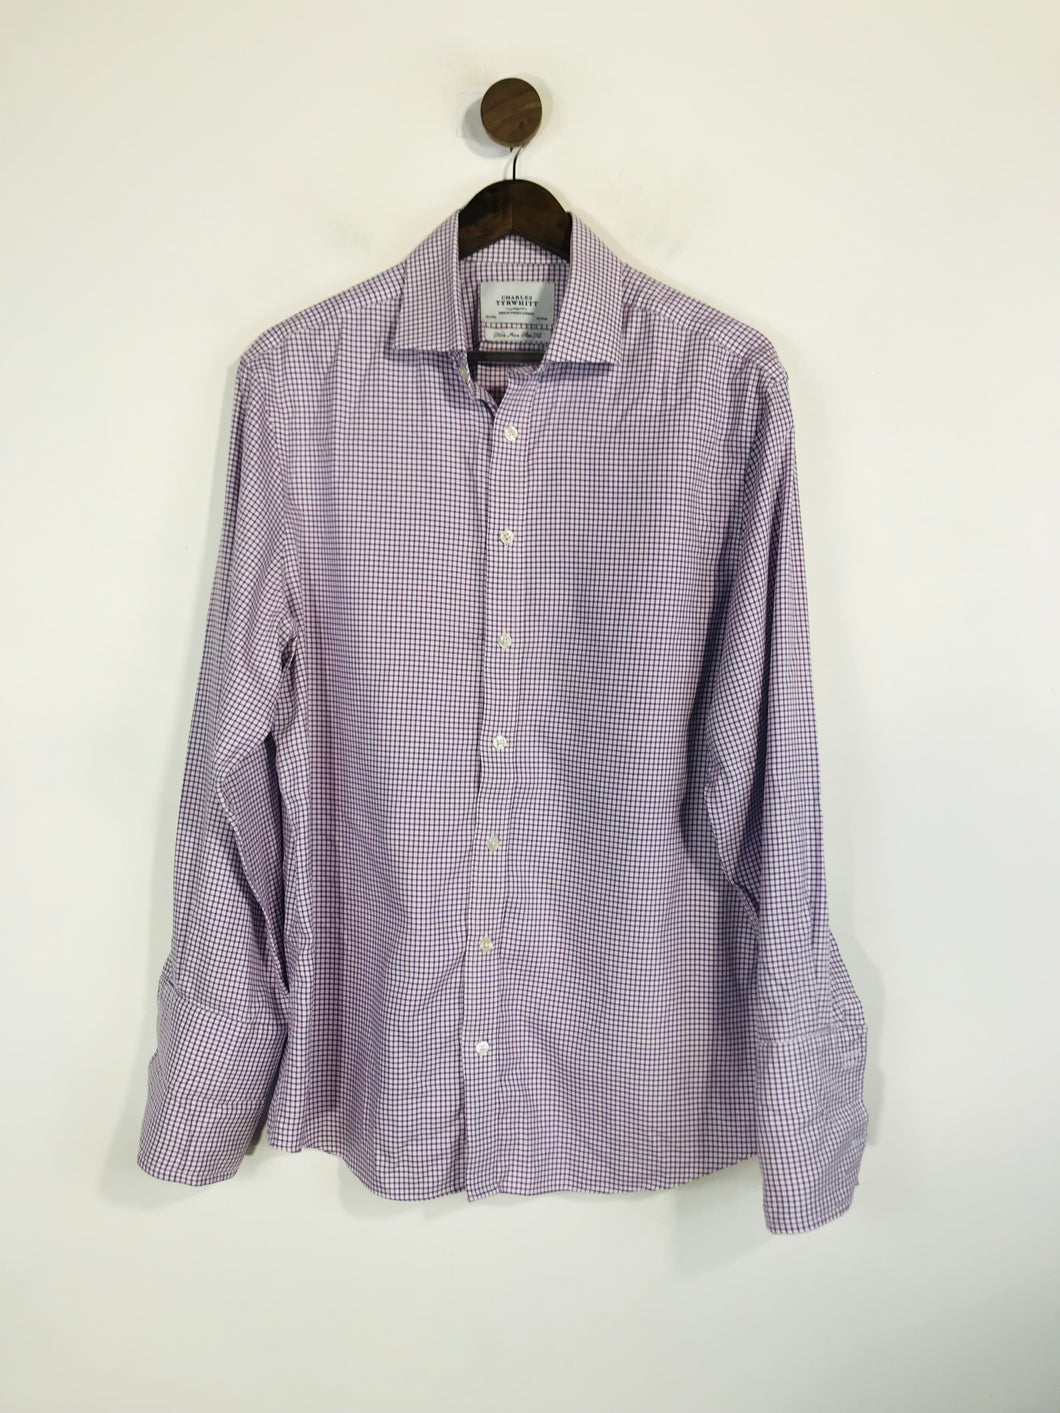 Charles Tyrwhitt Men's Cotton Striped Button-Up Shirt | 16.5 42 | Purple